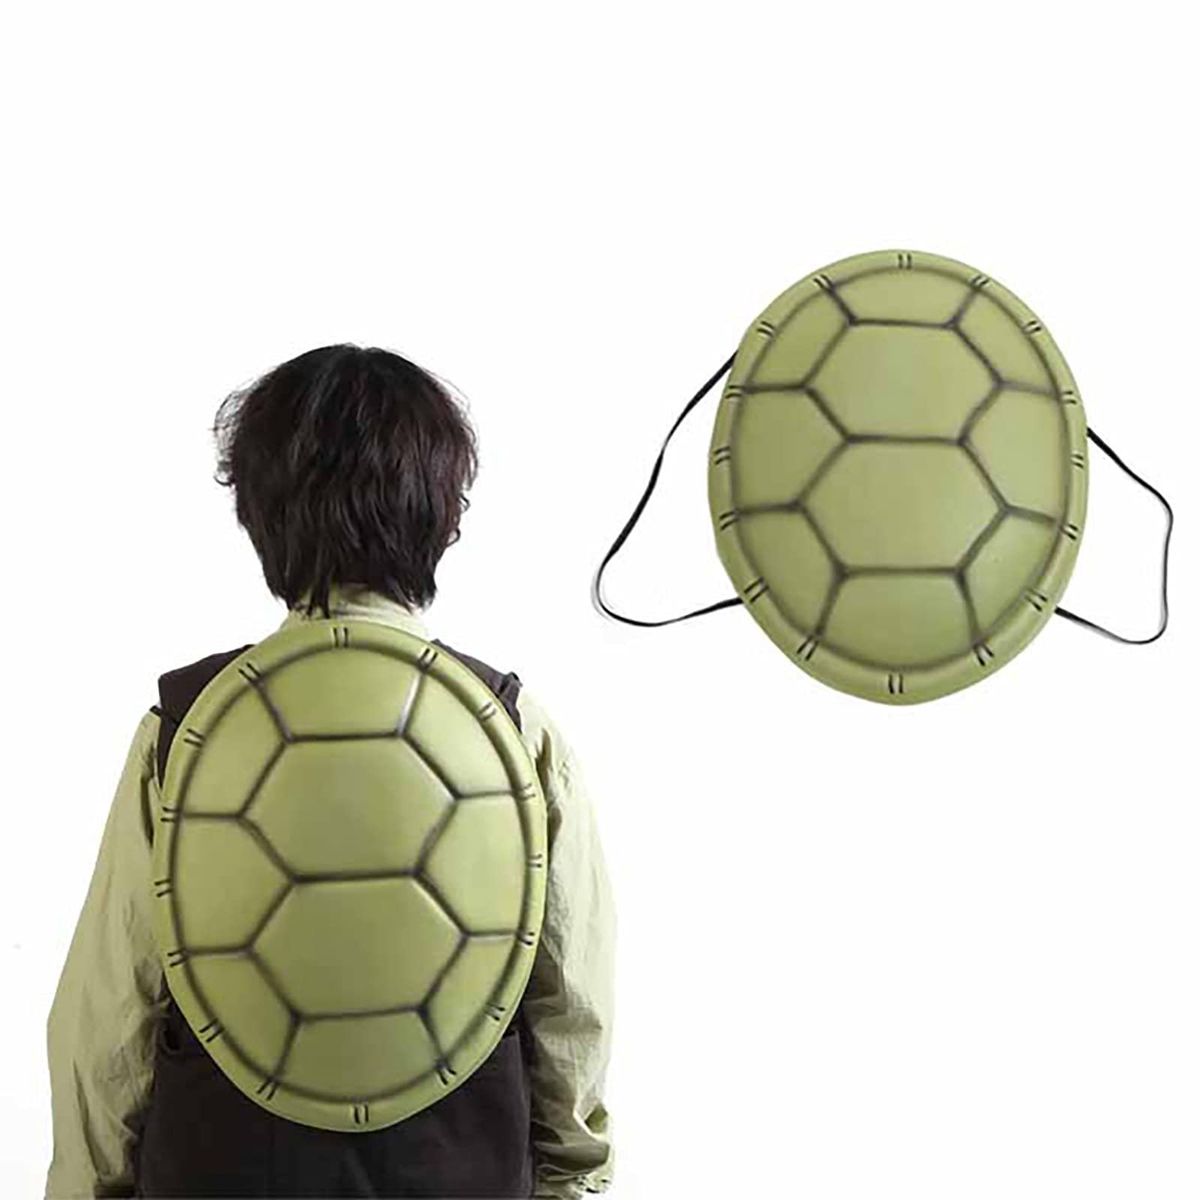 Foam Turtle Shell Back Adult Costume Prop Green